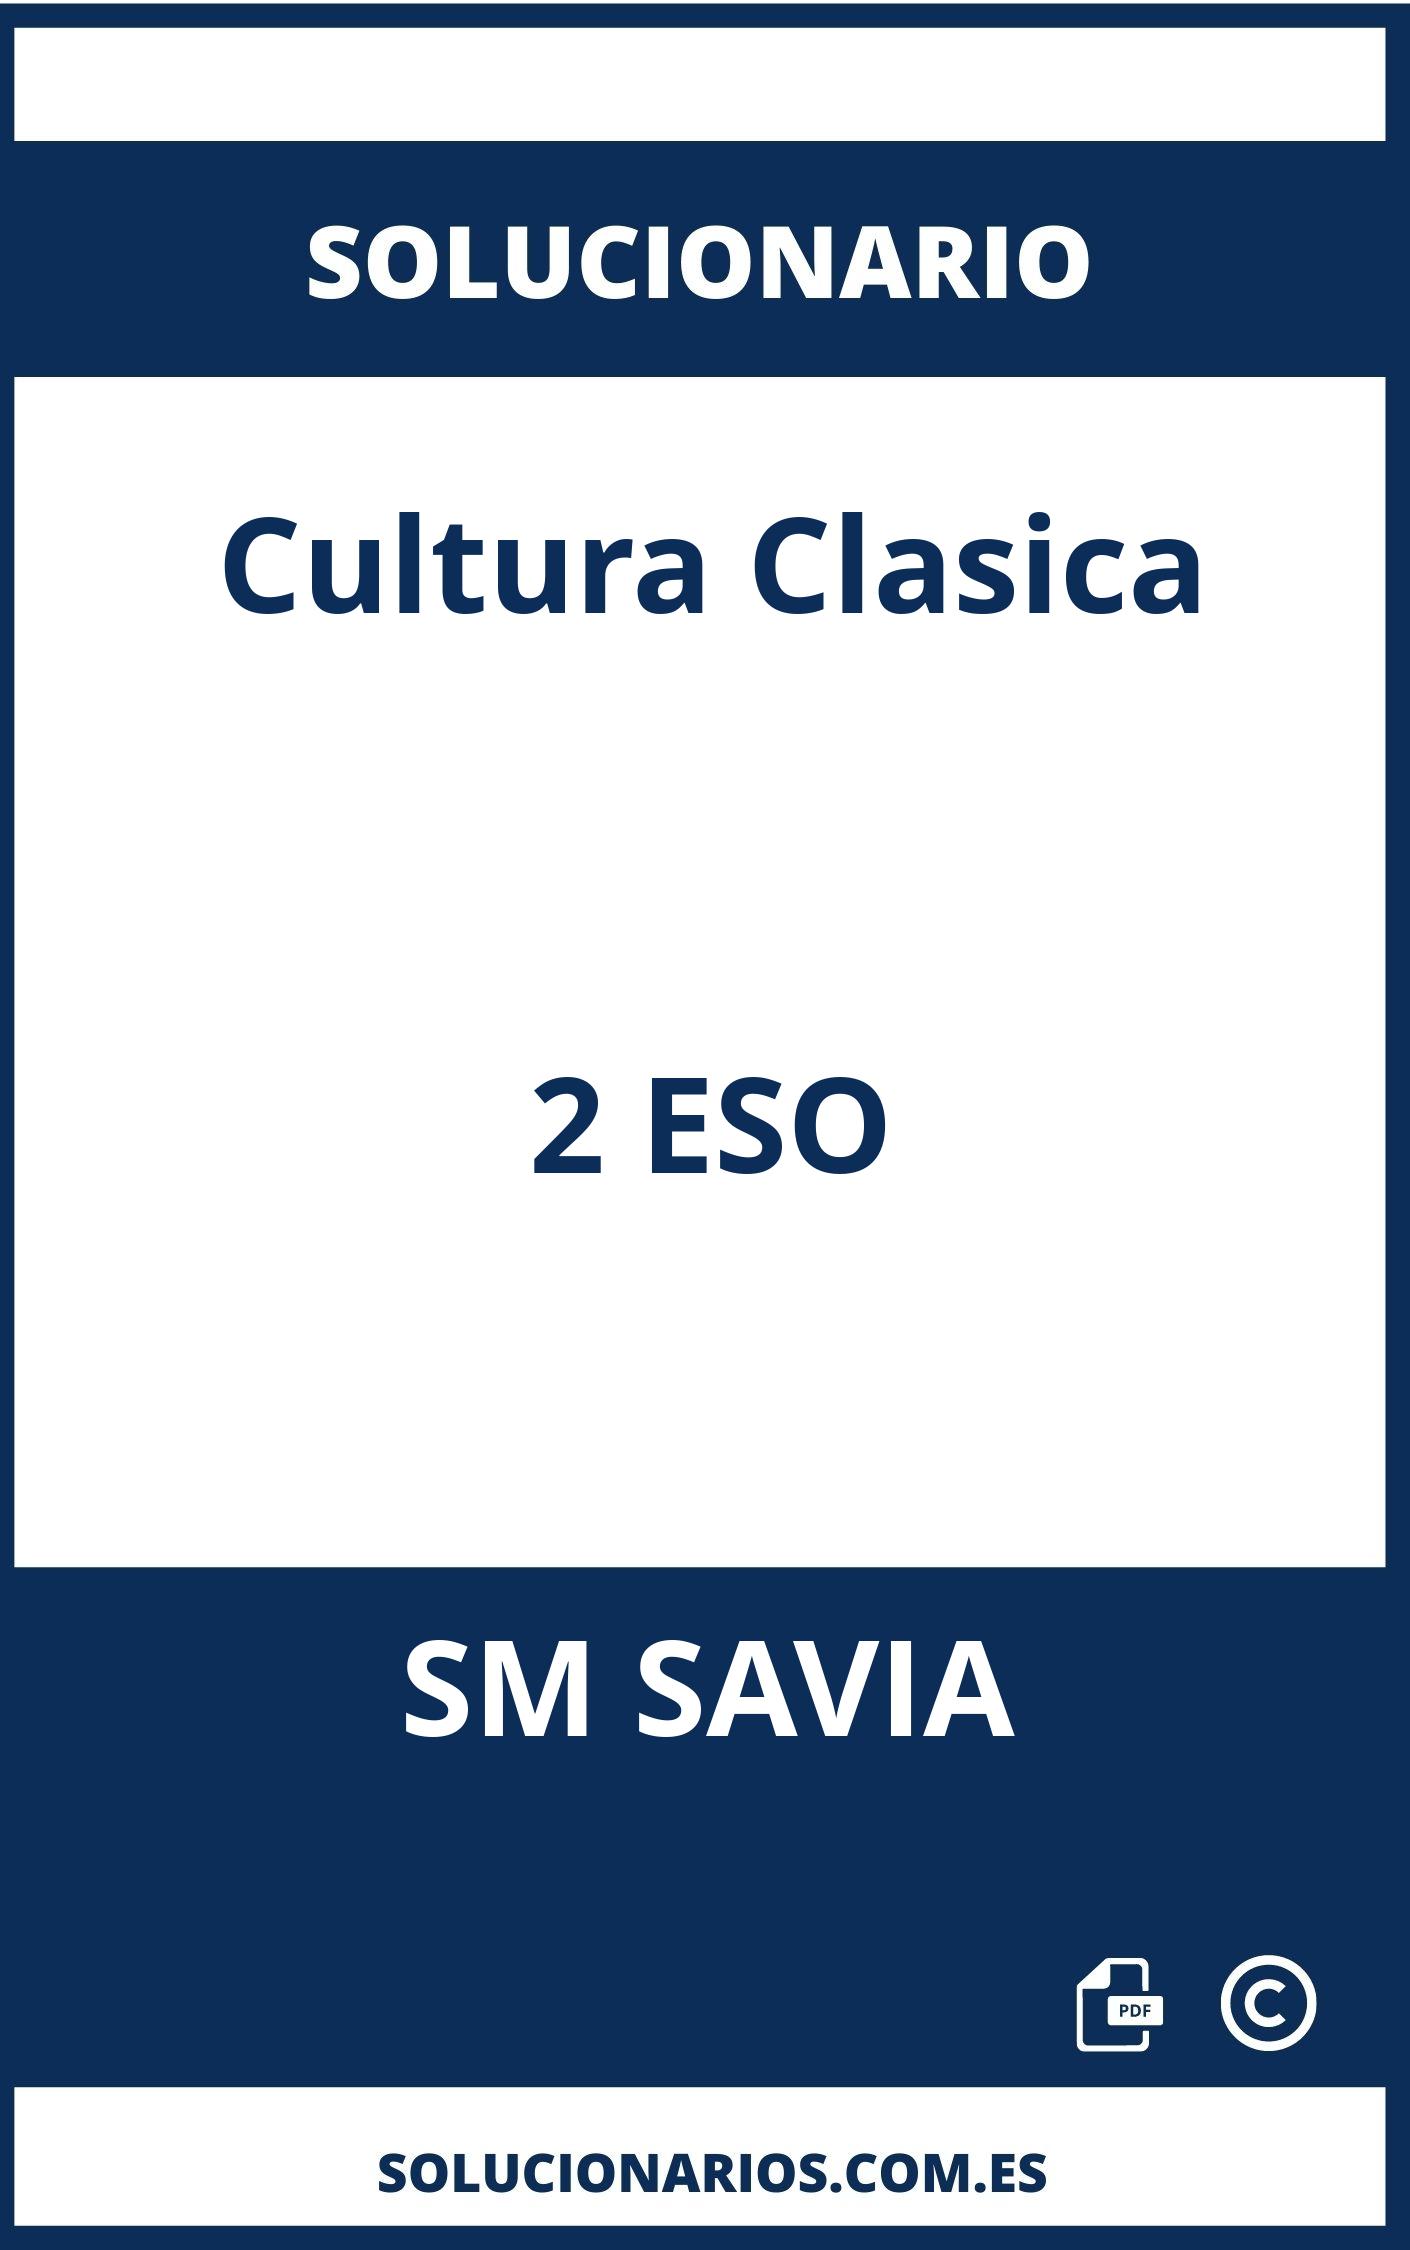 Solucionario Cultura Clasica 2 ESO SM SAVIA